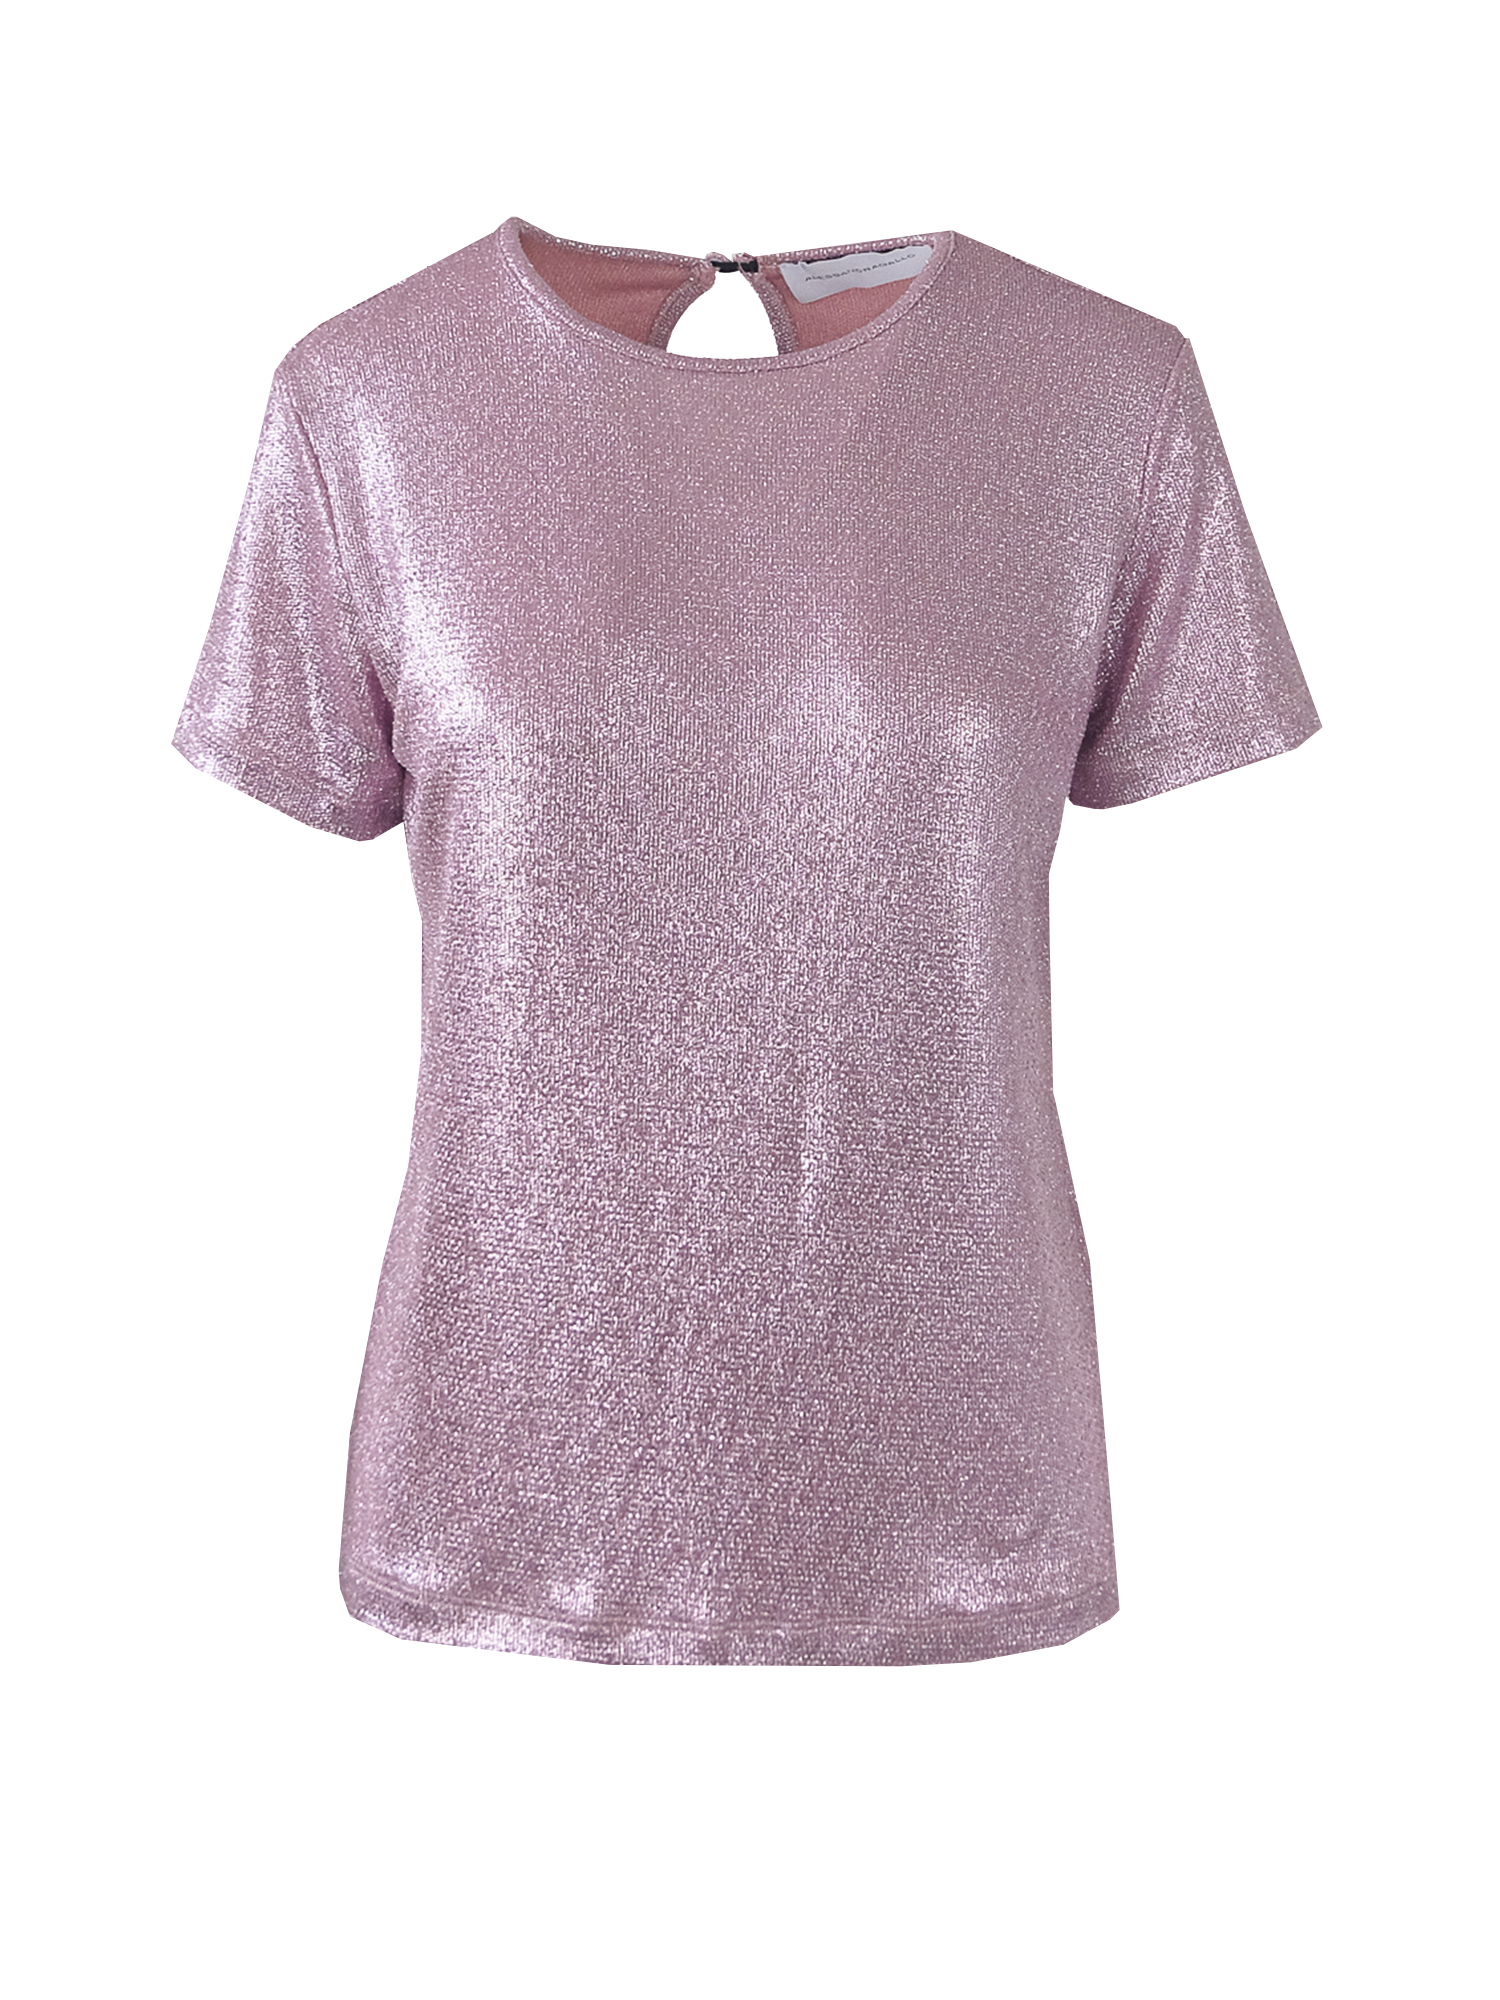 CARMEN - pink lurex t-shirt